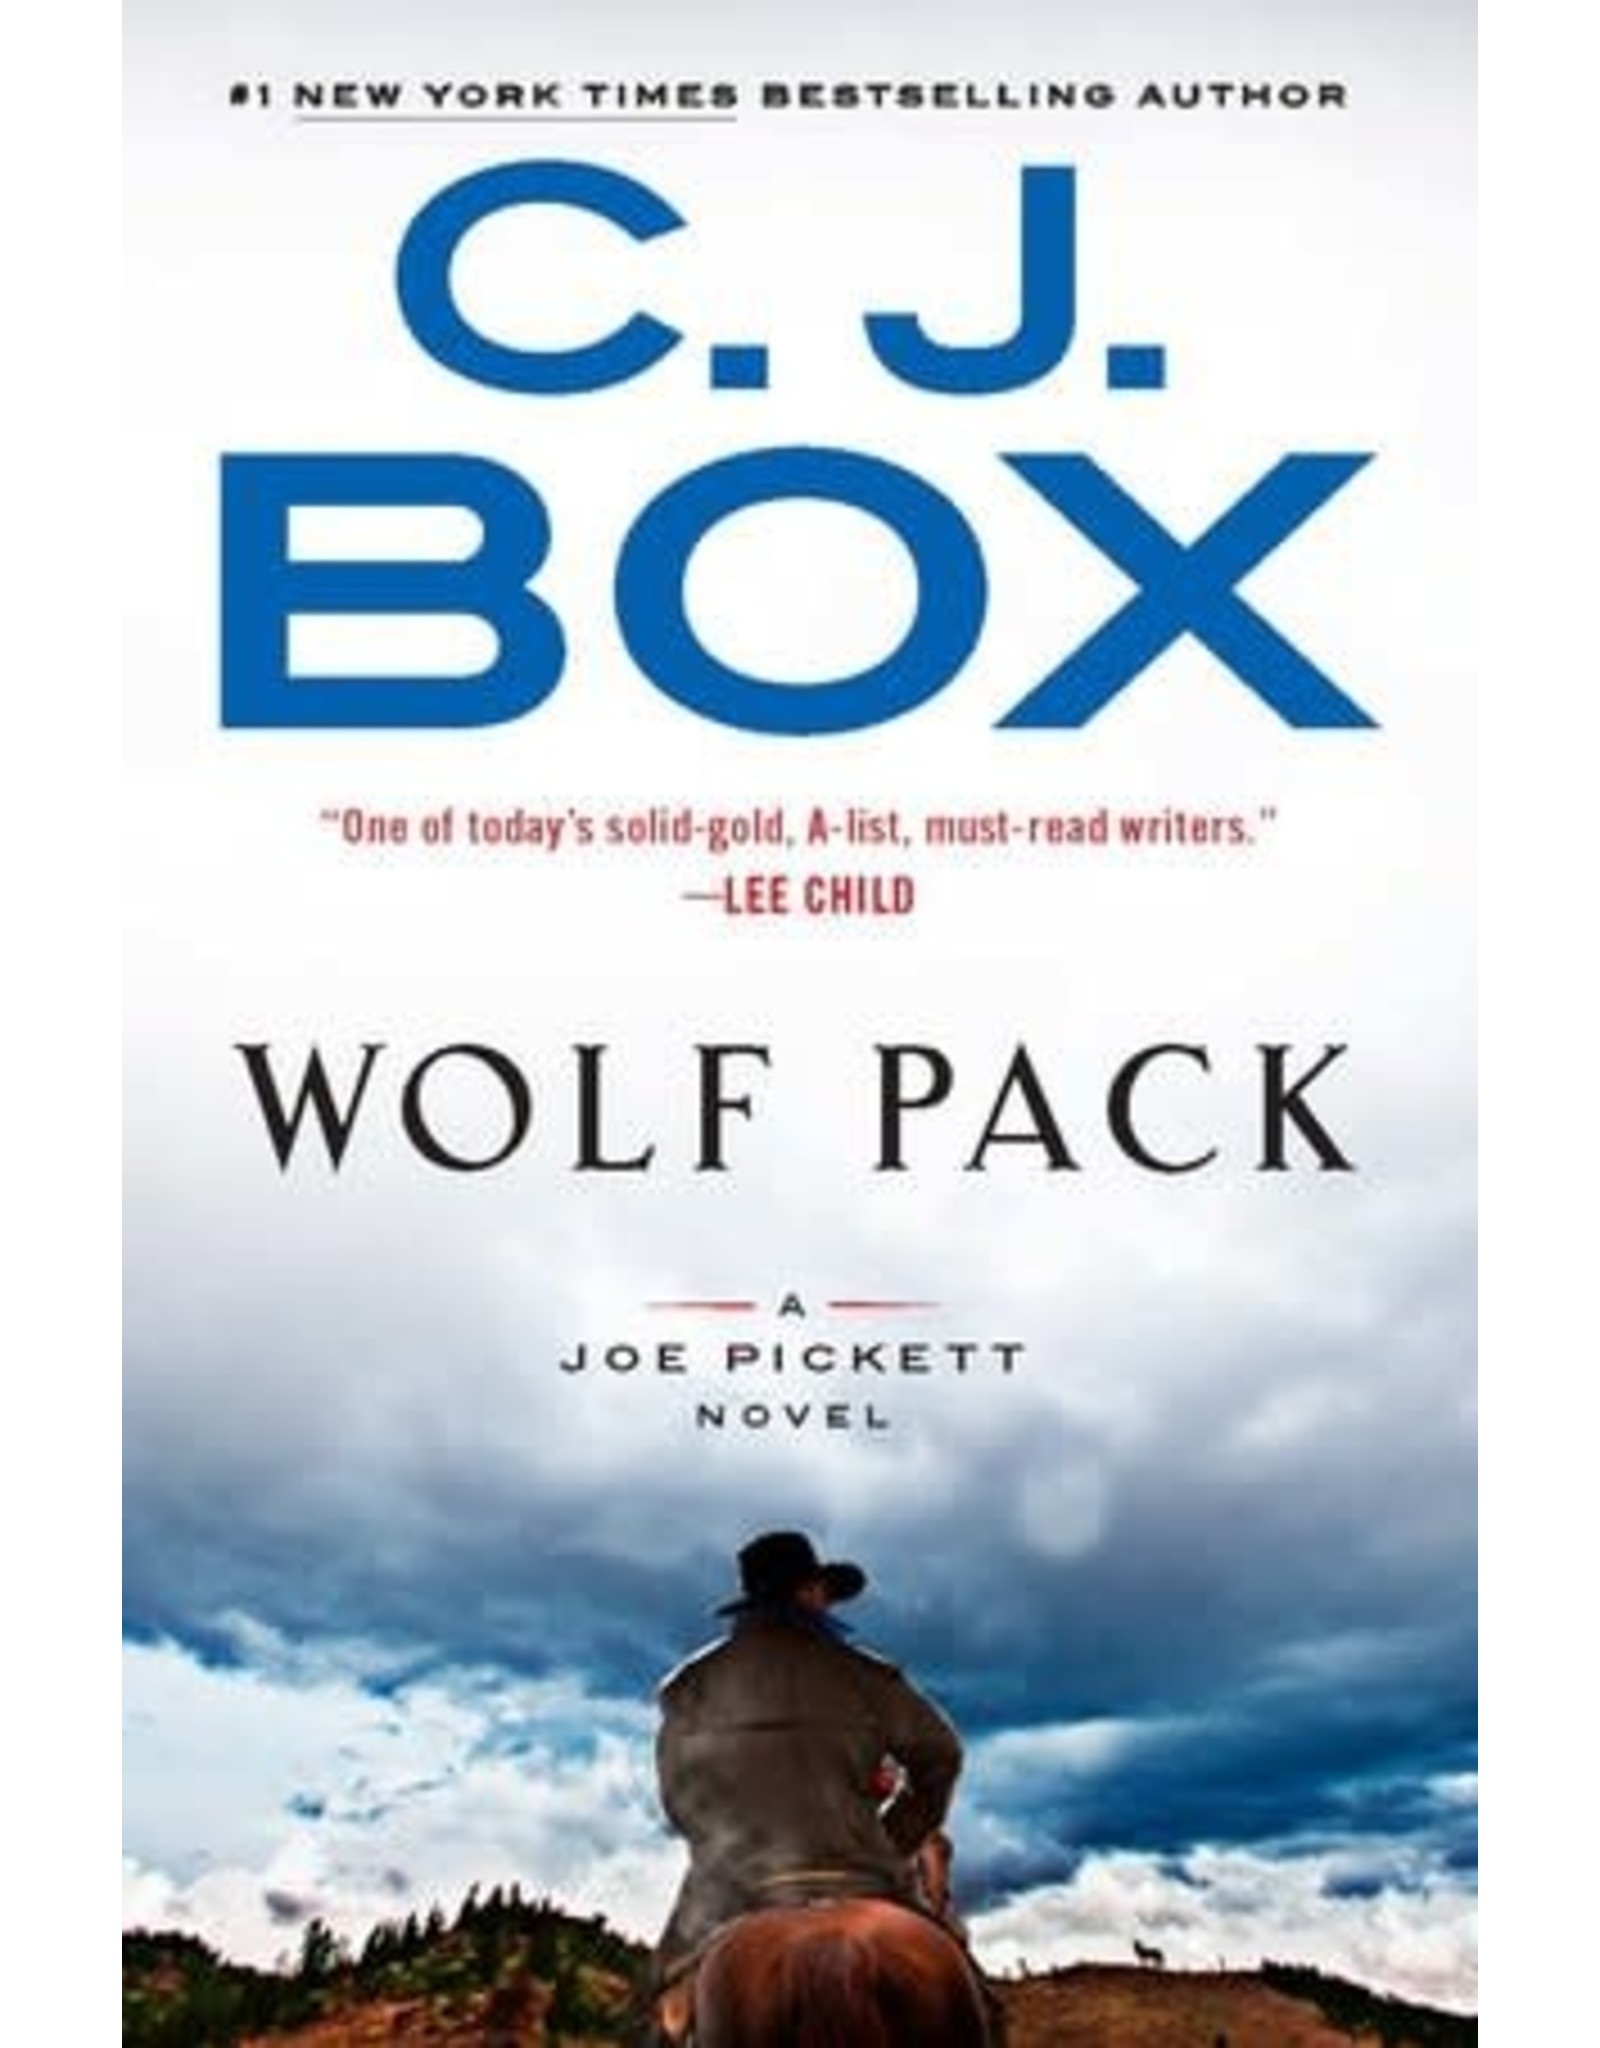 C. J. Box Wolf Pack - A Joe Pickett Novel by C. J. Box